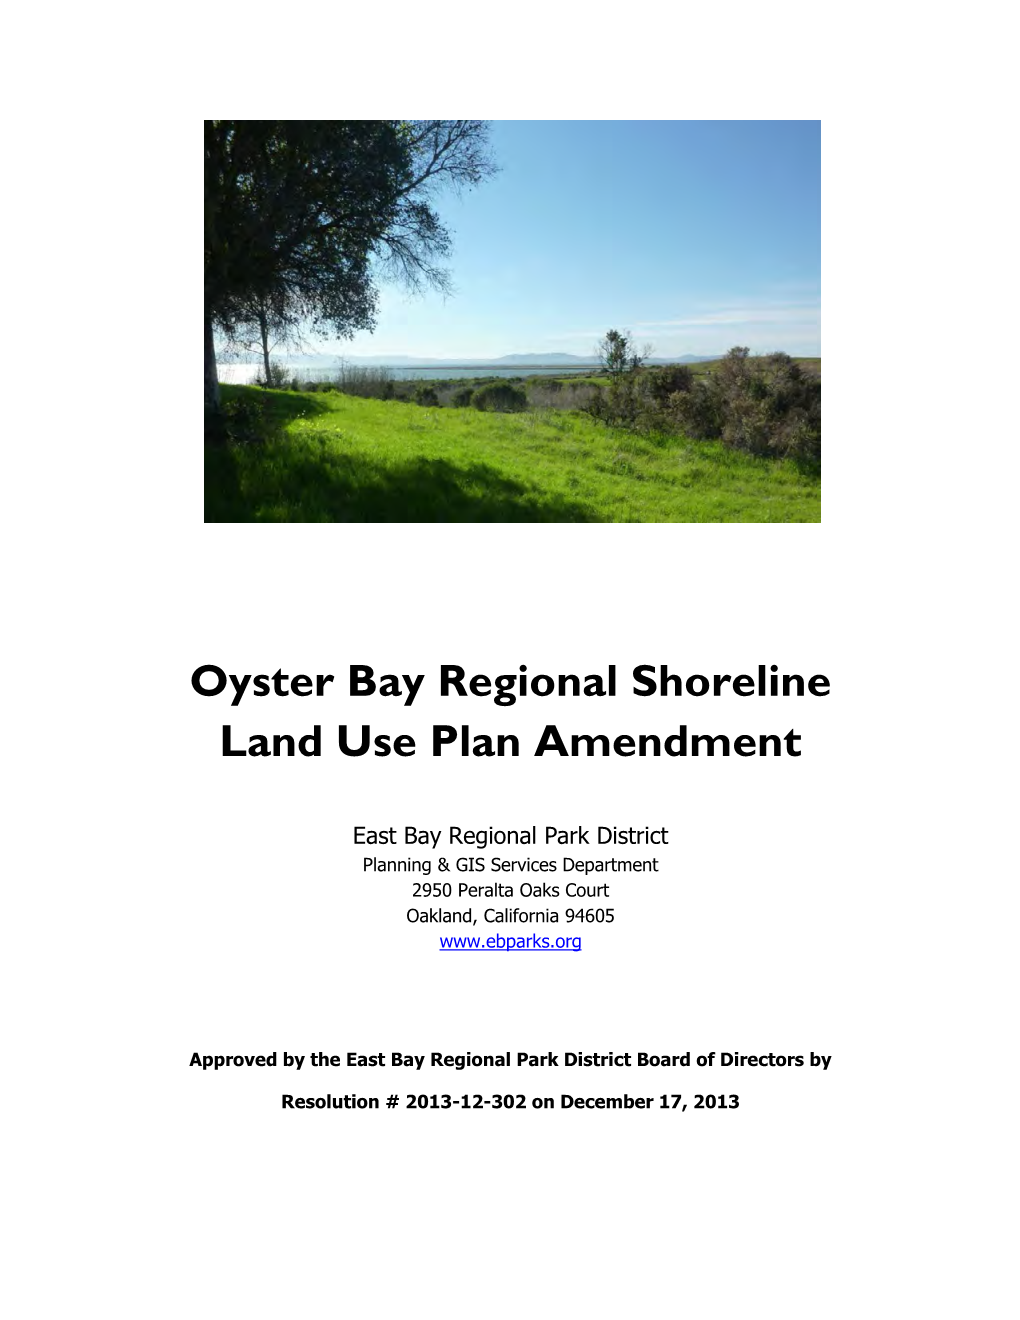 Oyster Bay Regional Shoreline Land Use Plan Amendment